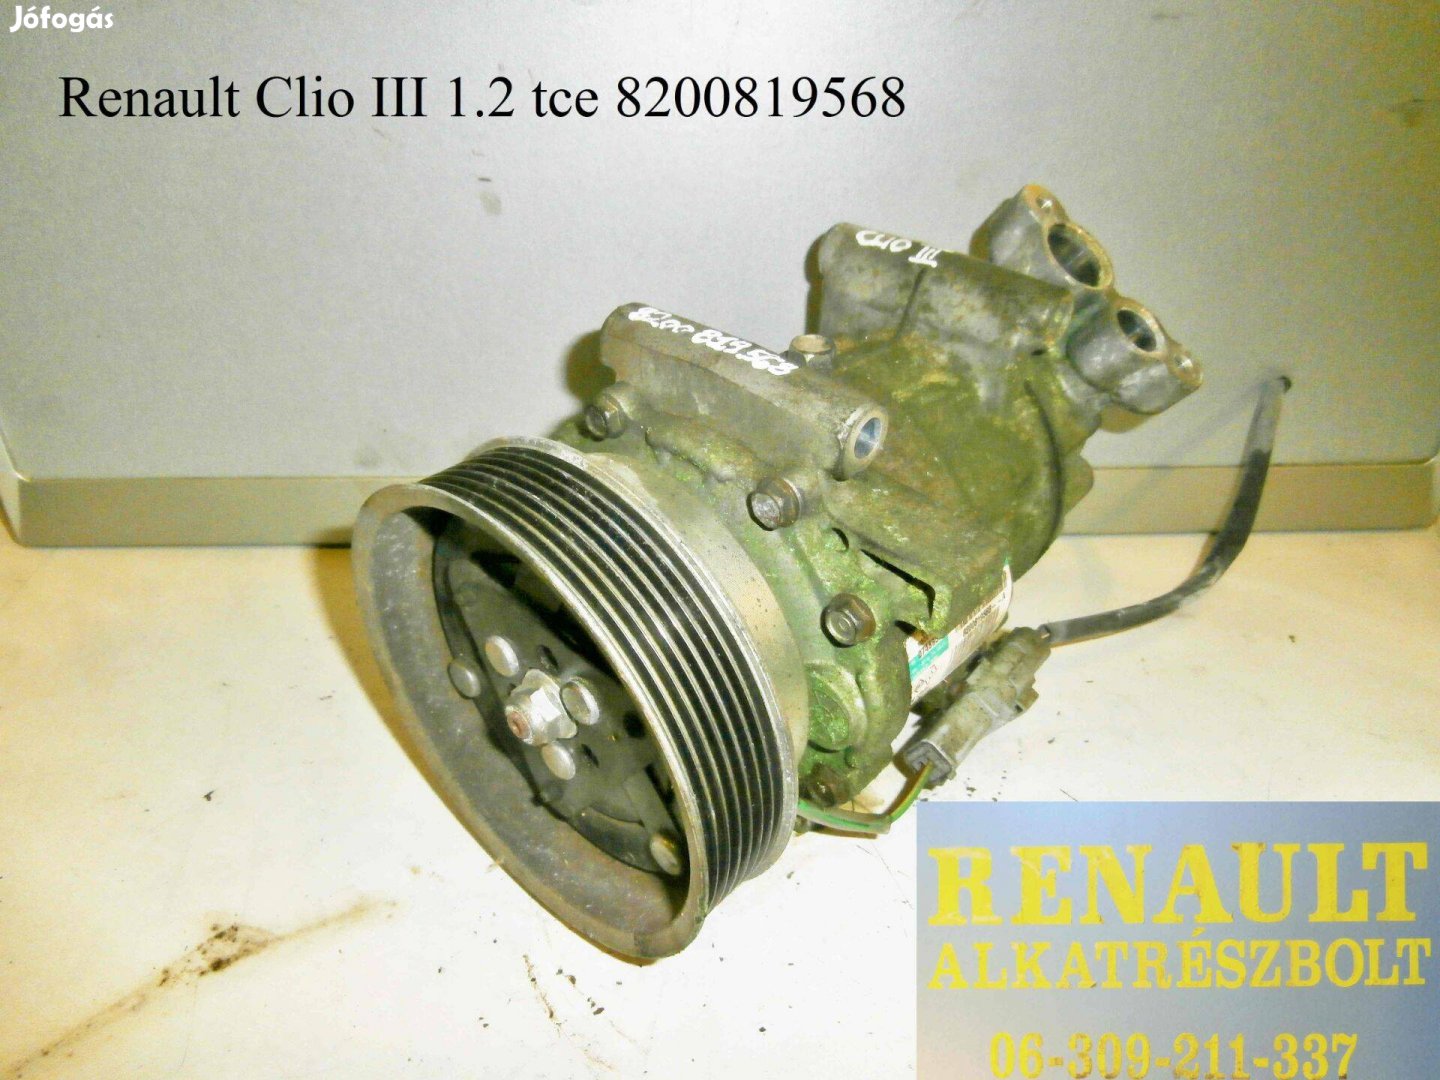 Renault Clio III 1.2 tce 8200819568 klímakompresszor